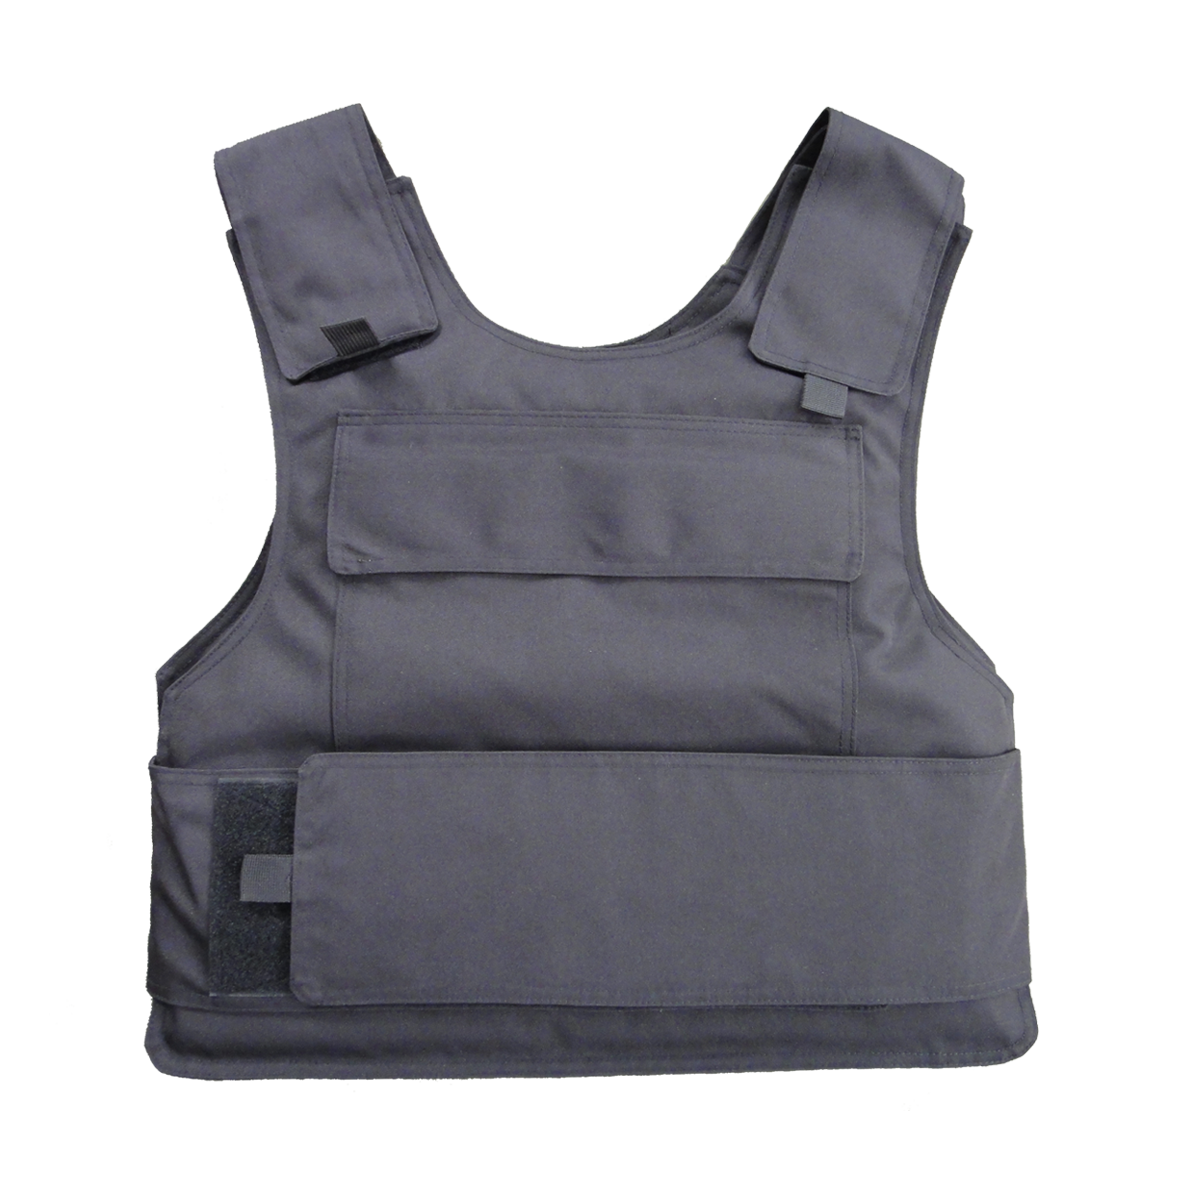 Download PNG image - Bulletproof Vest Transparent Isolated Images PNG 